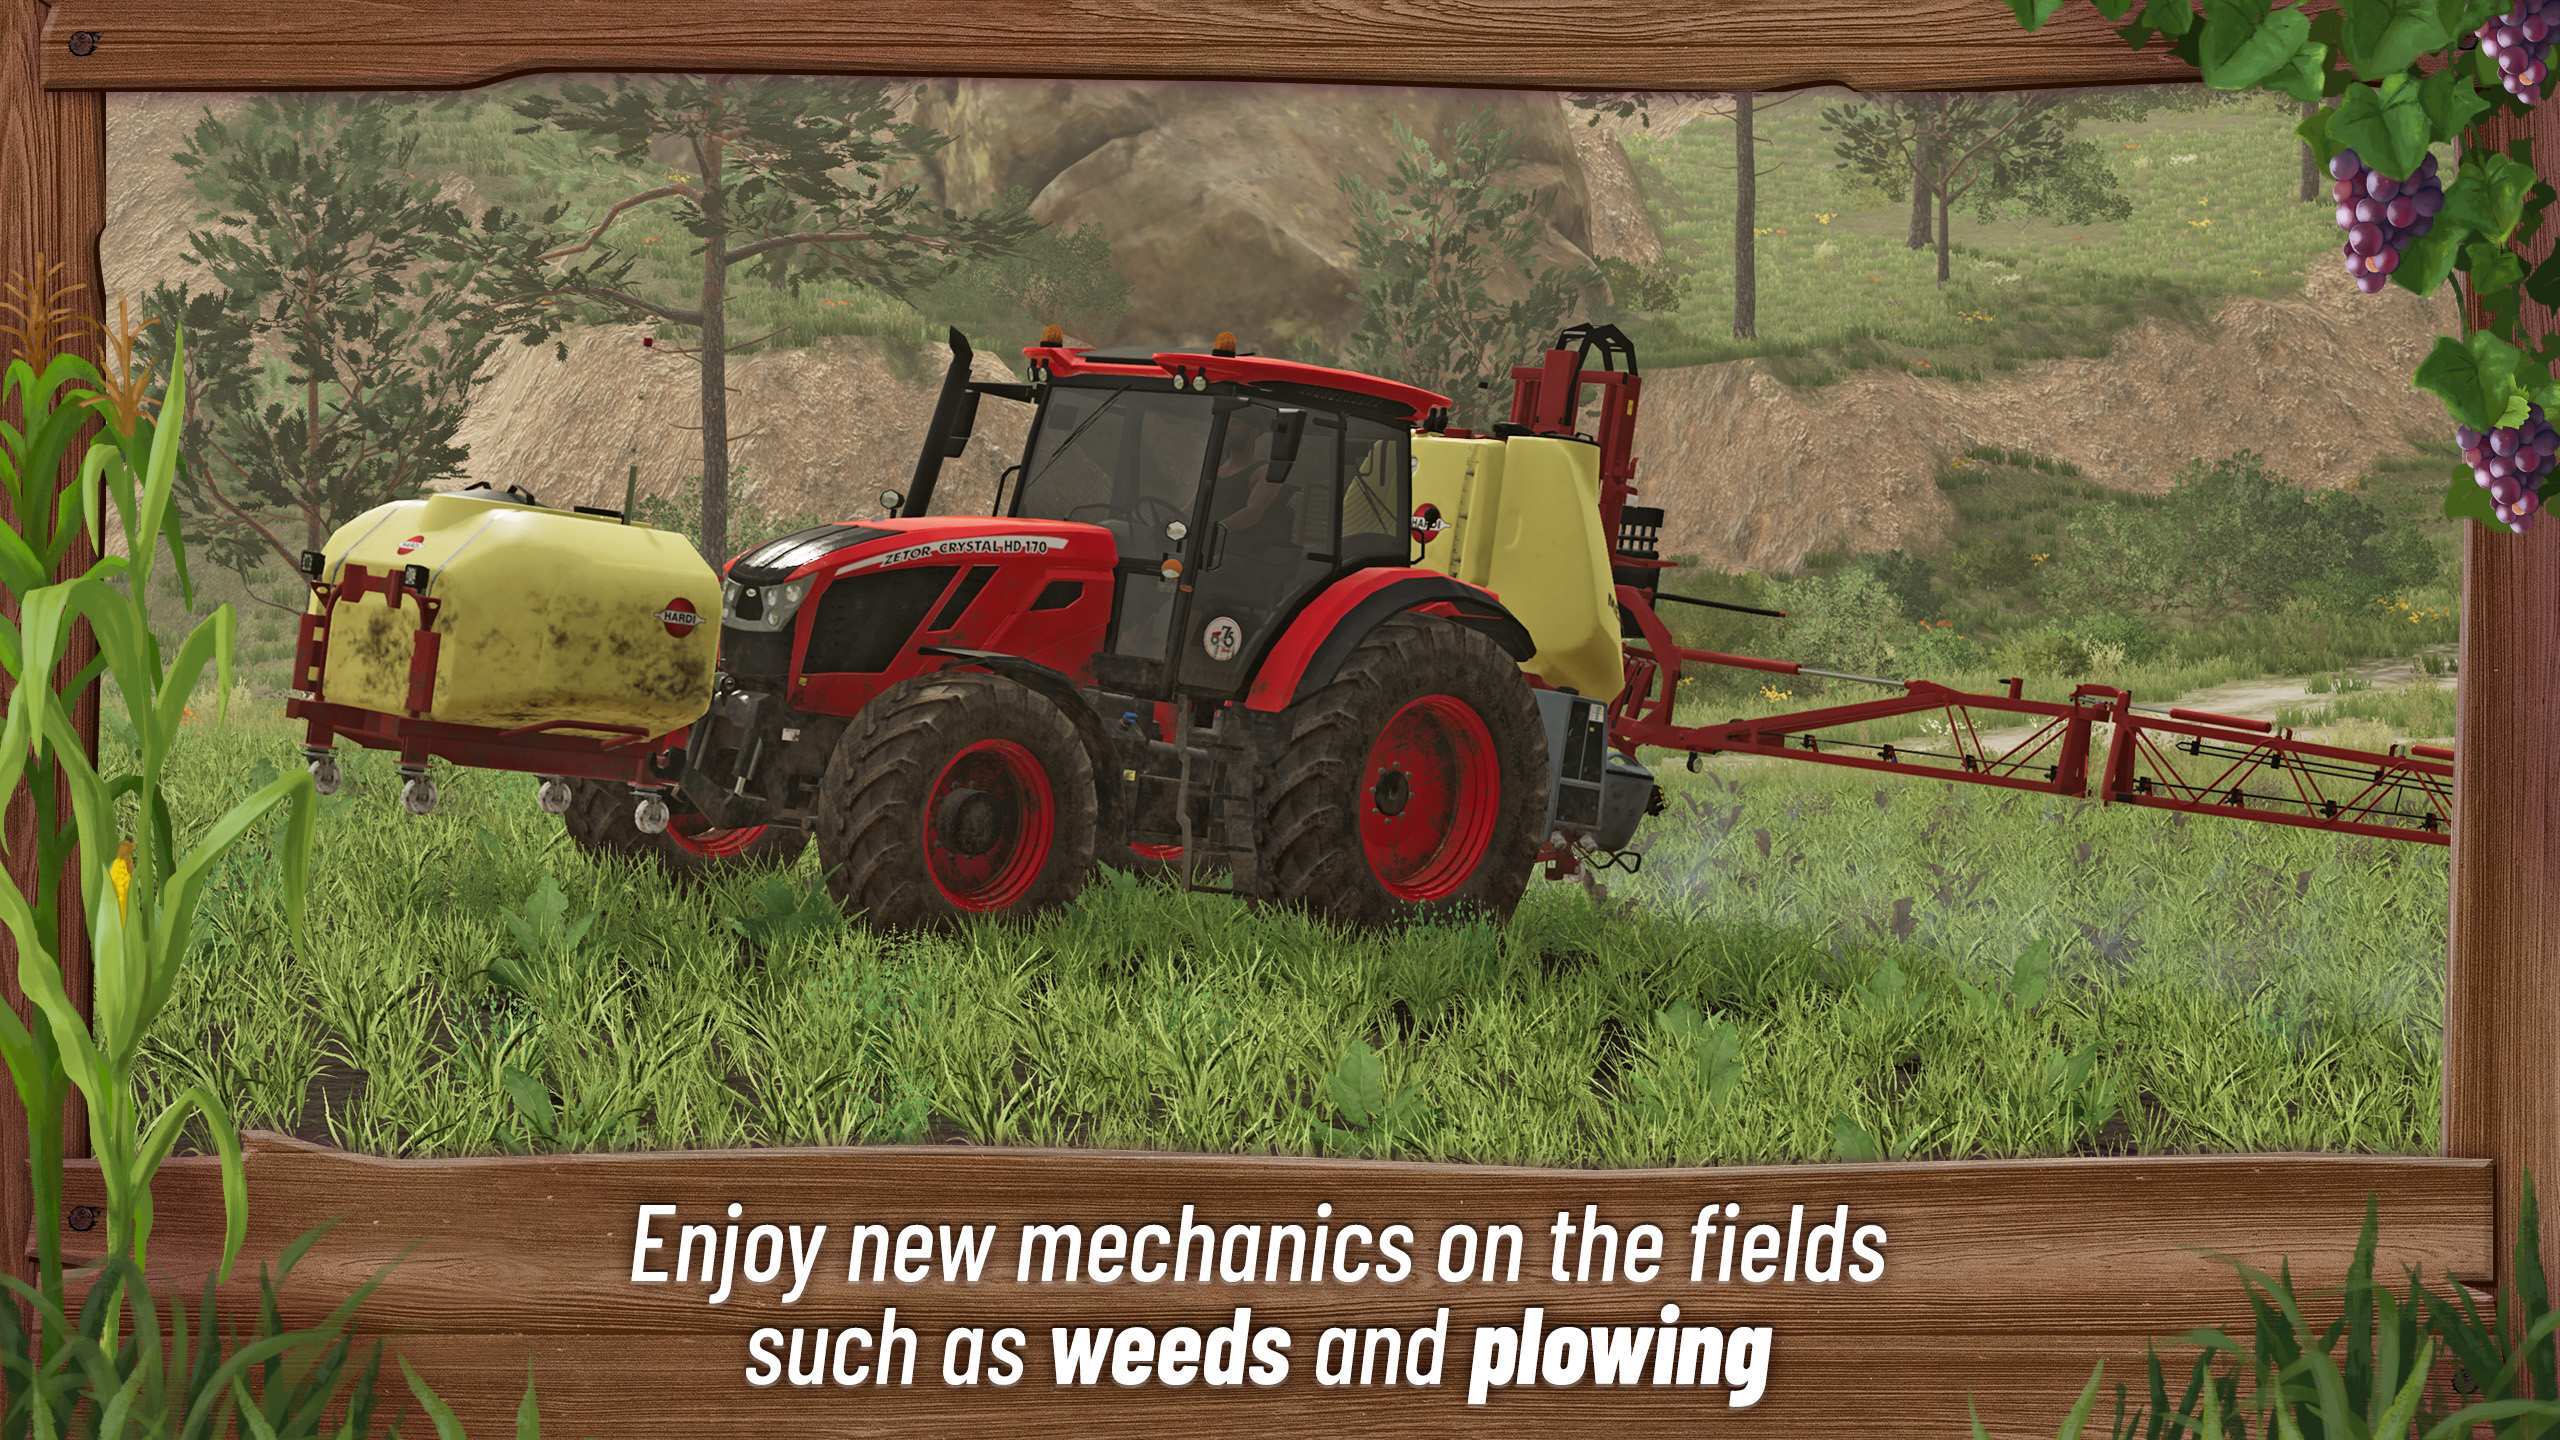 Download & Play Farming Simulator 20 on PC & Mac (Emulator)